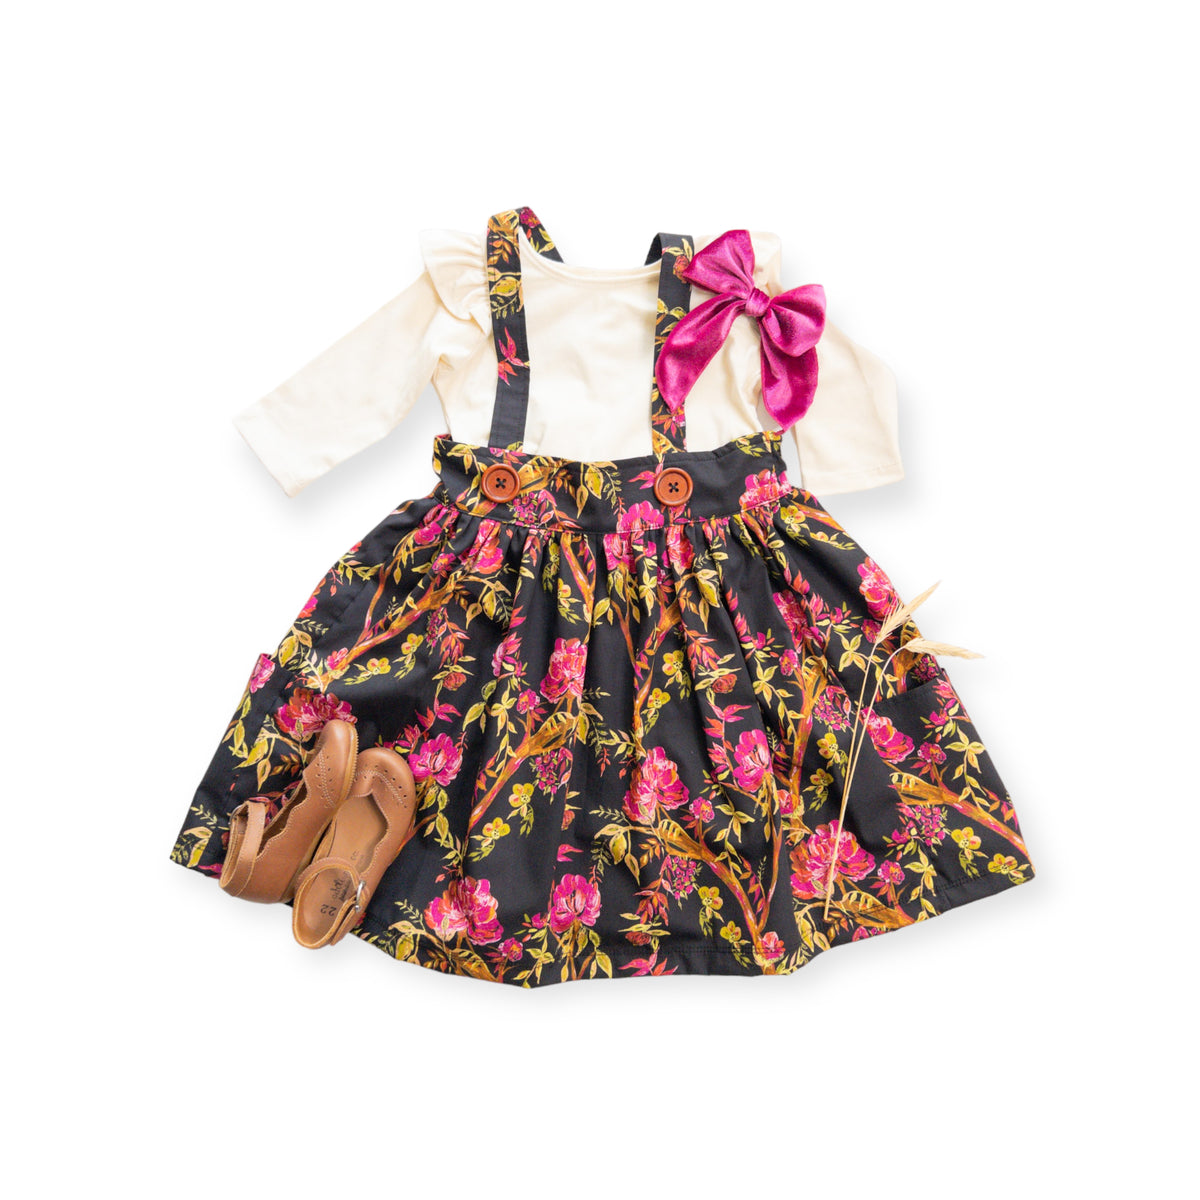 Savannah Suspender  Skirt in ‘Vivid Rose'- Ready to Ship